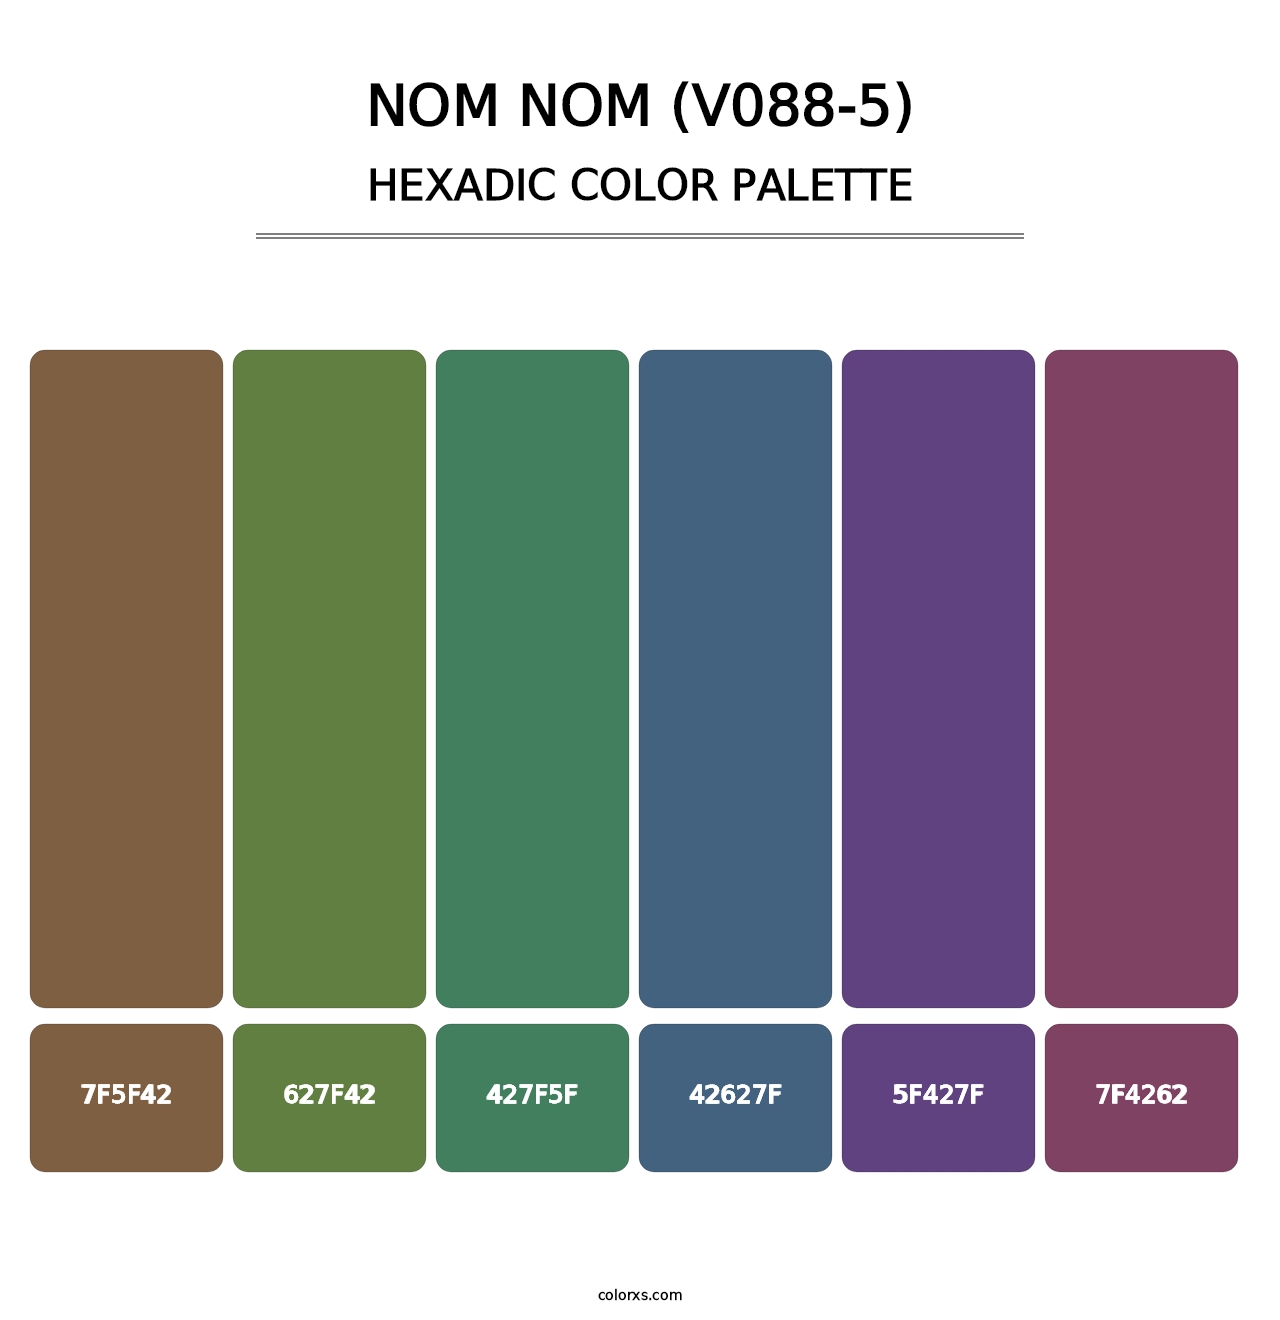 Nom Nom (V088-5) - Hexadic Color Palette